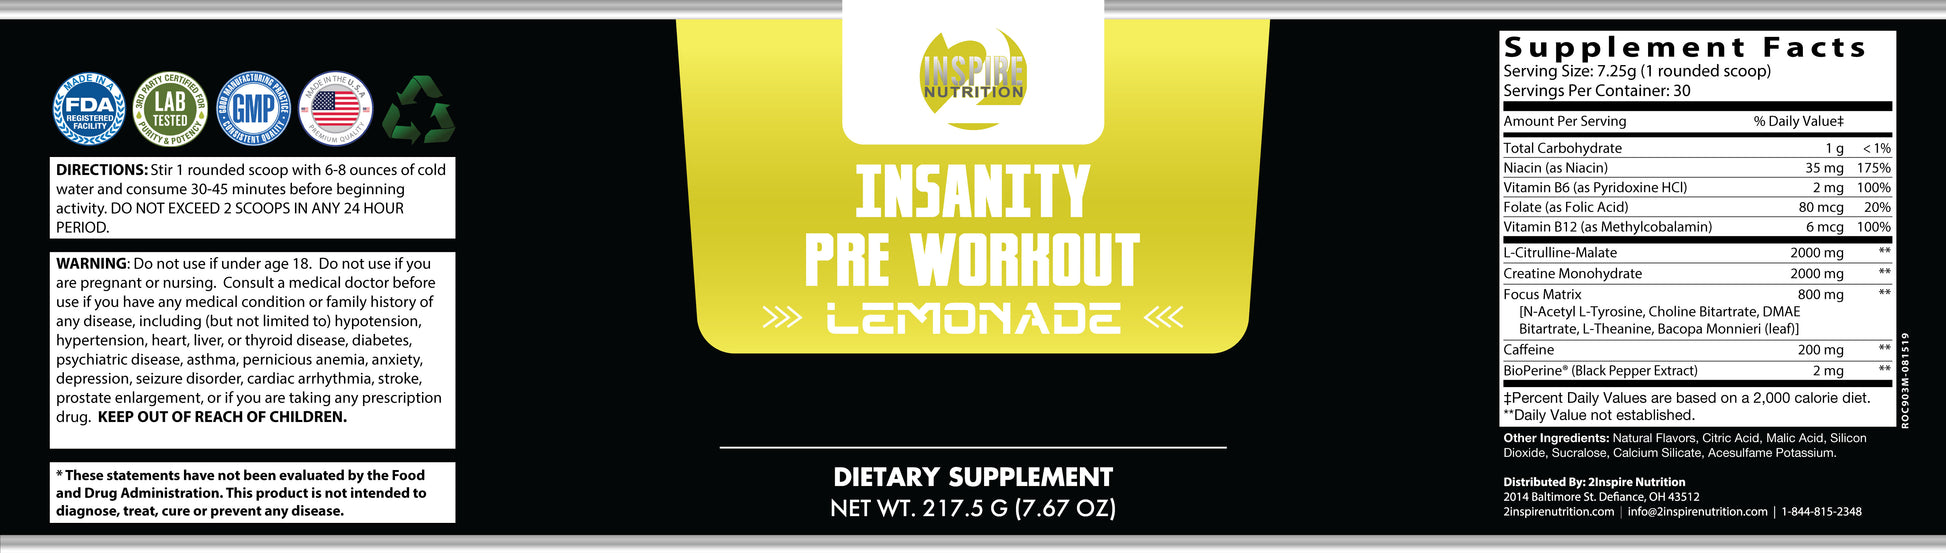 Insanity Pre-Workout-Lemonade Wrapper